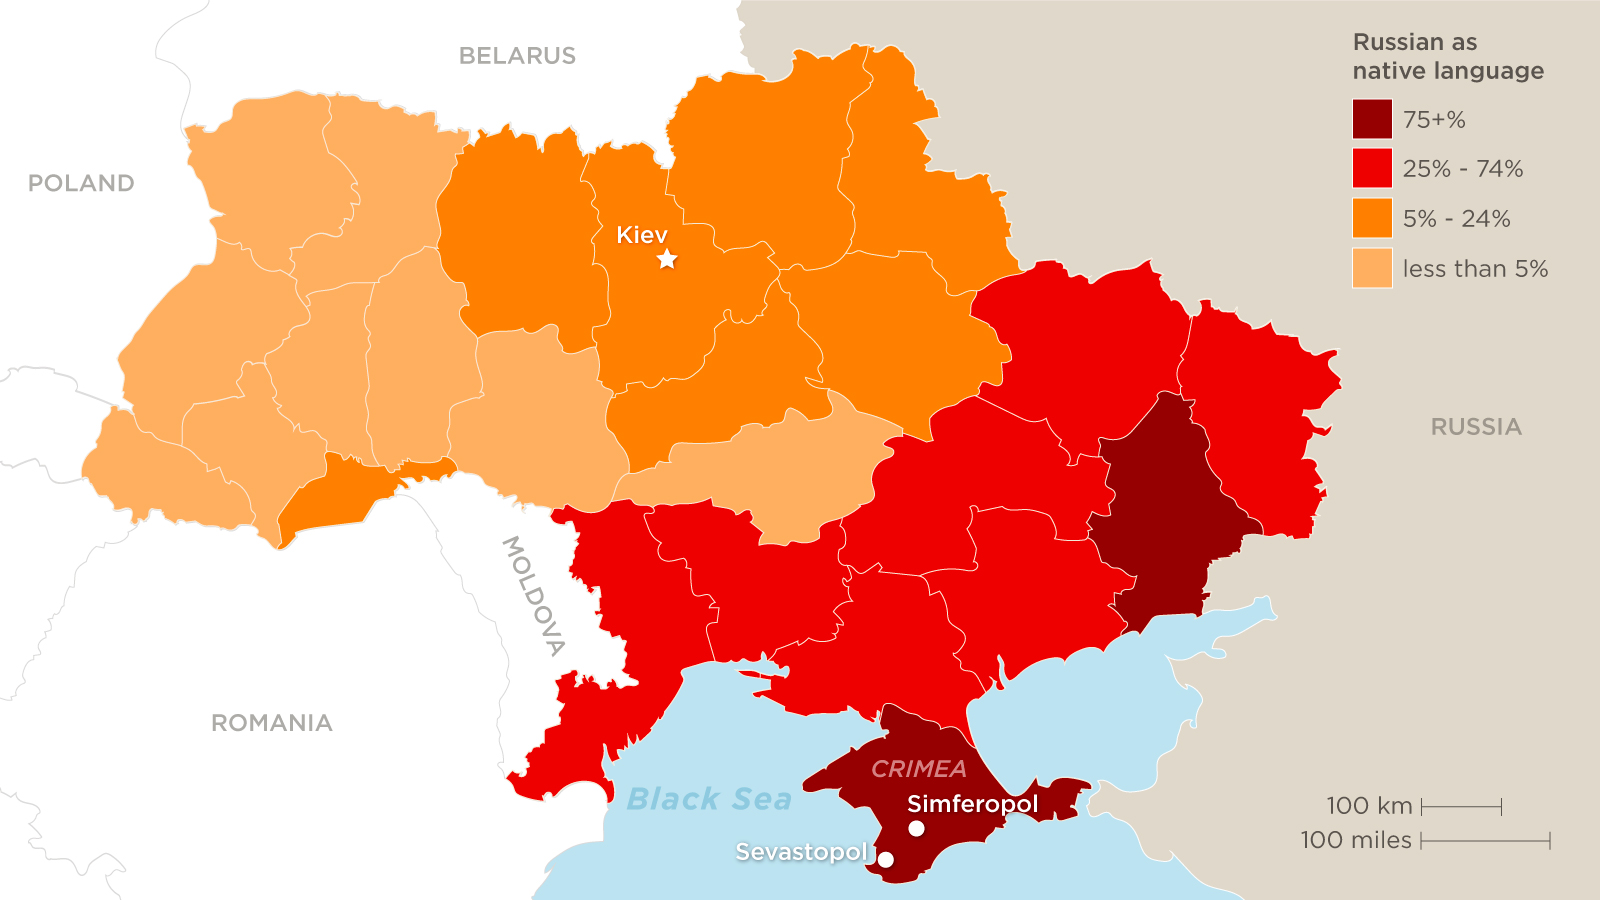 https://i.cdn.turner.com/cnn/interactive/2014/02/world/ukraine-divided/media/ukraine_map_region_language.jpg